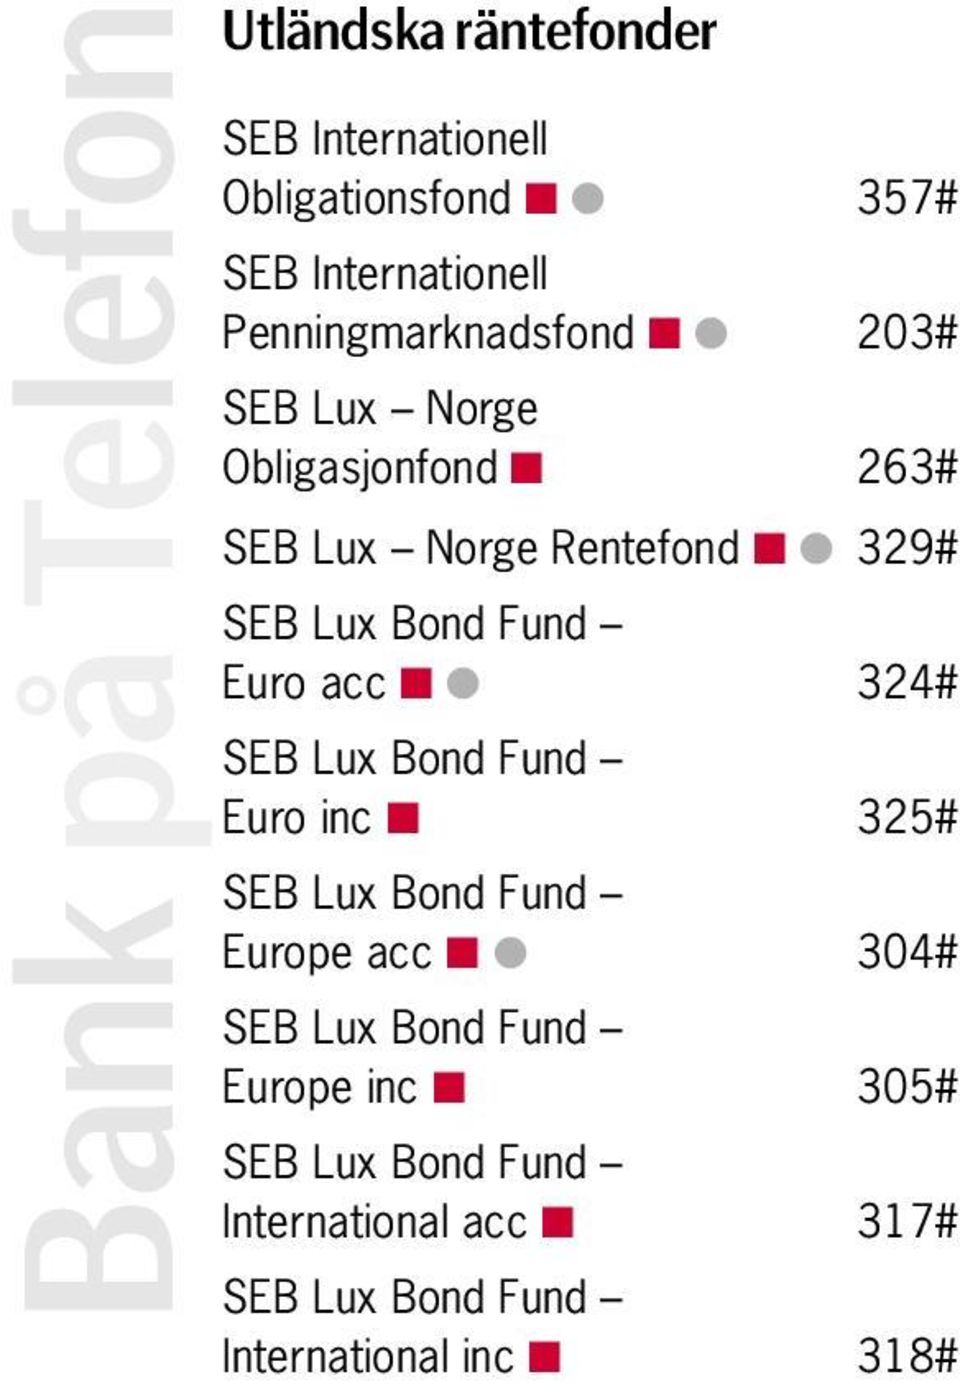 263# SEB Lux Norge Rentefond 329# Euro acc 324# Euro inc 325# Europe